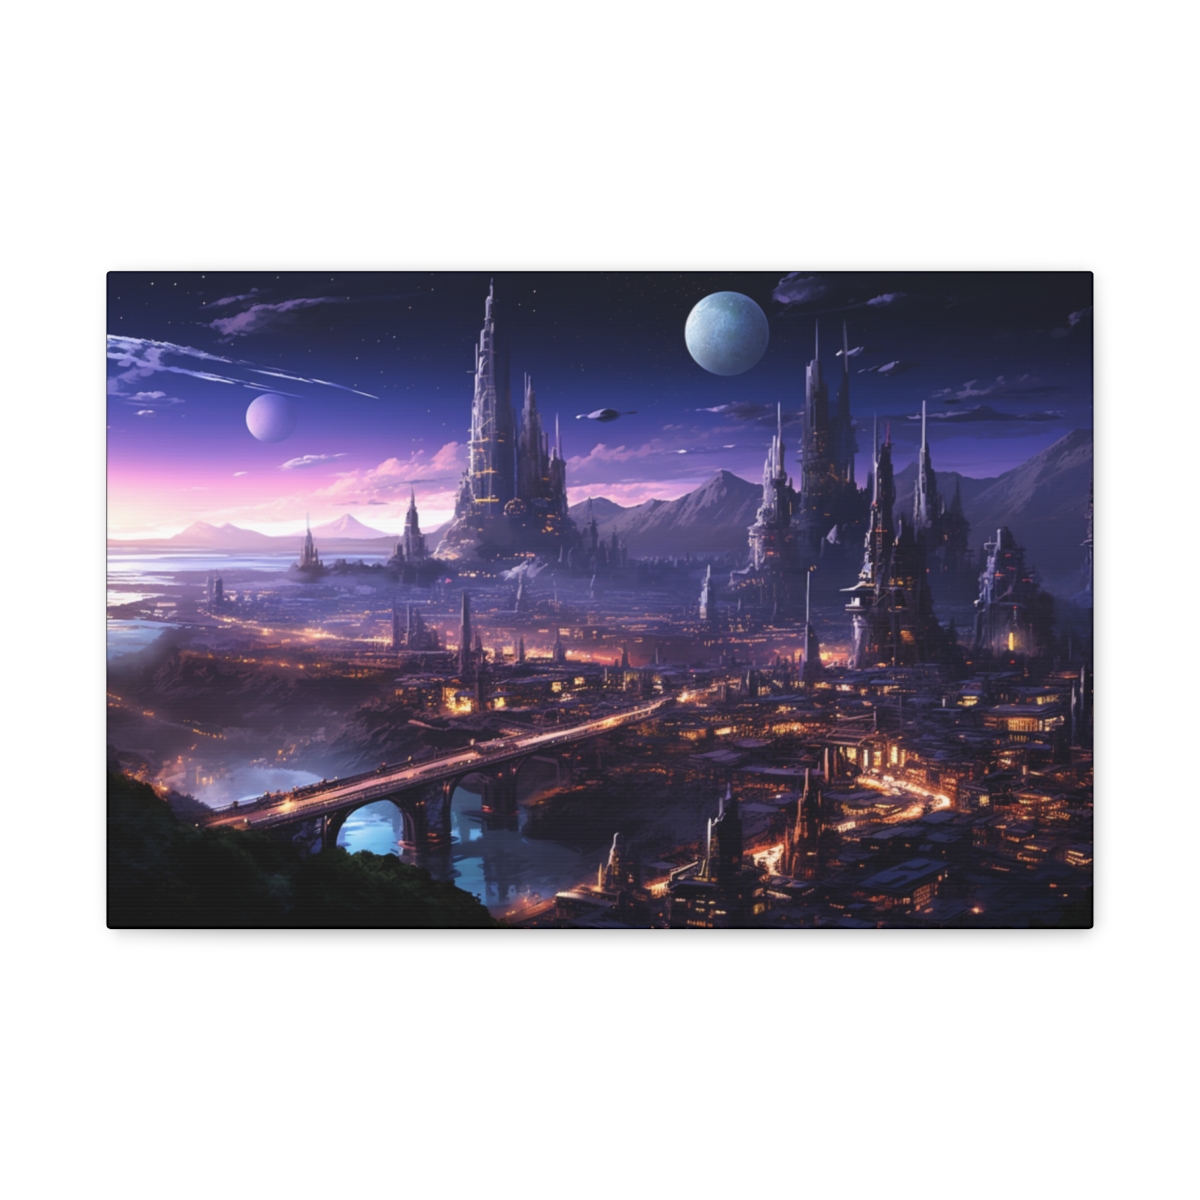 Fantasy Space Art Canvas Print: Level IV Civilization